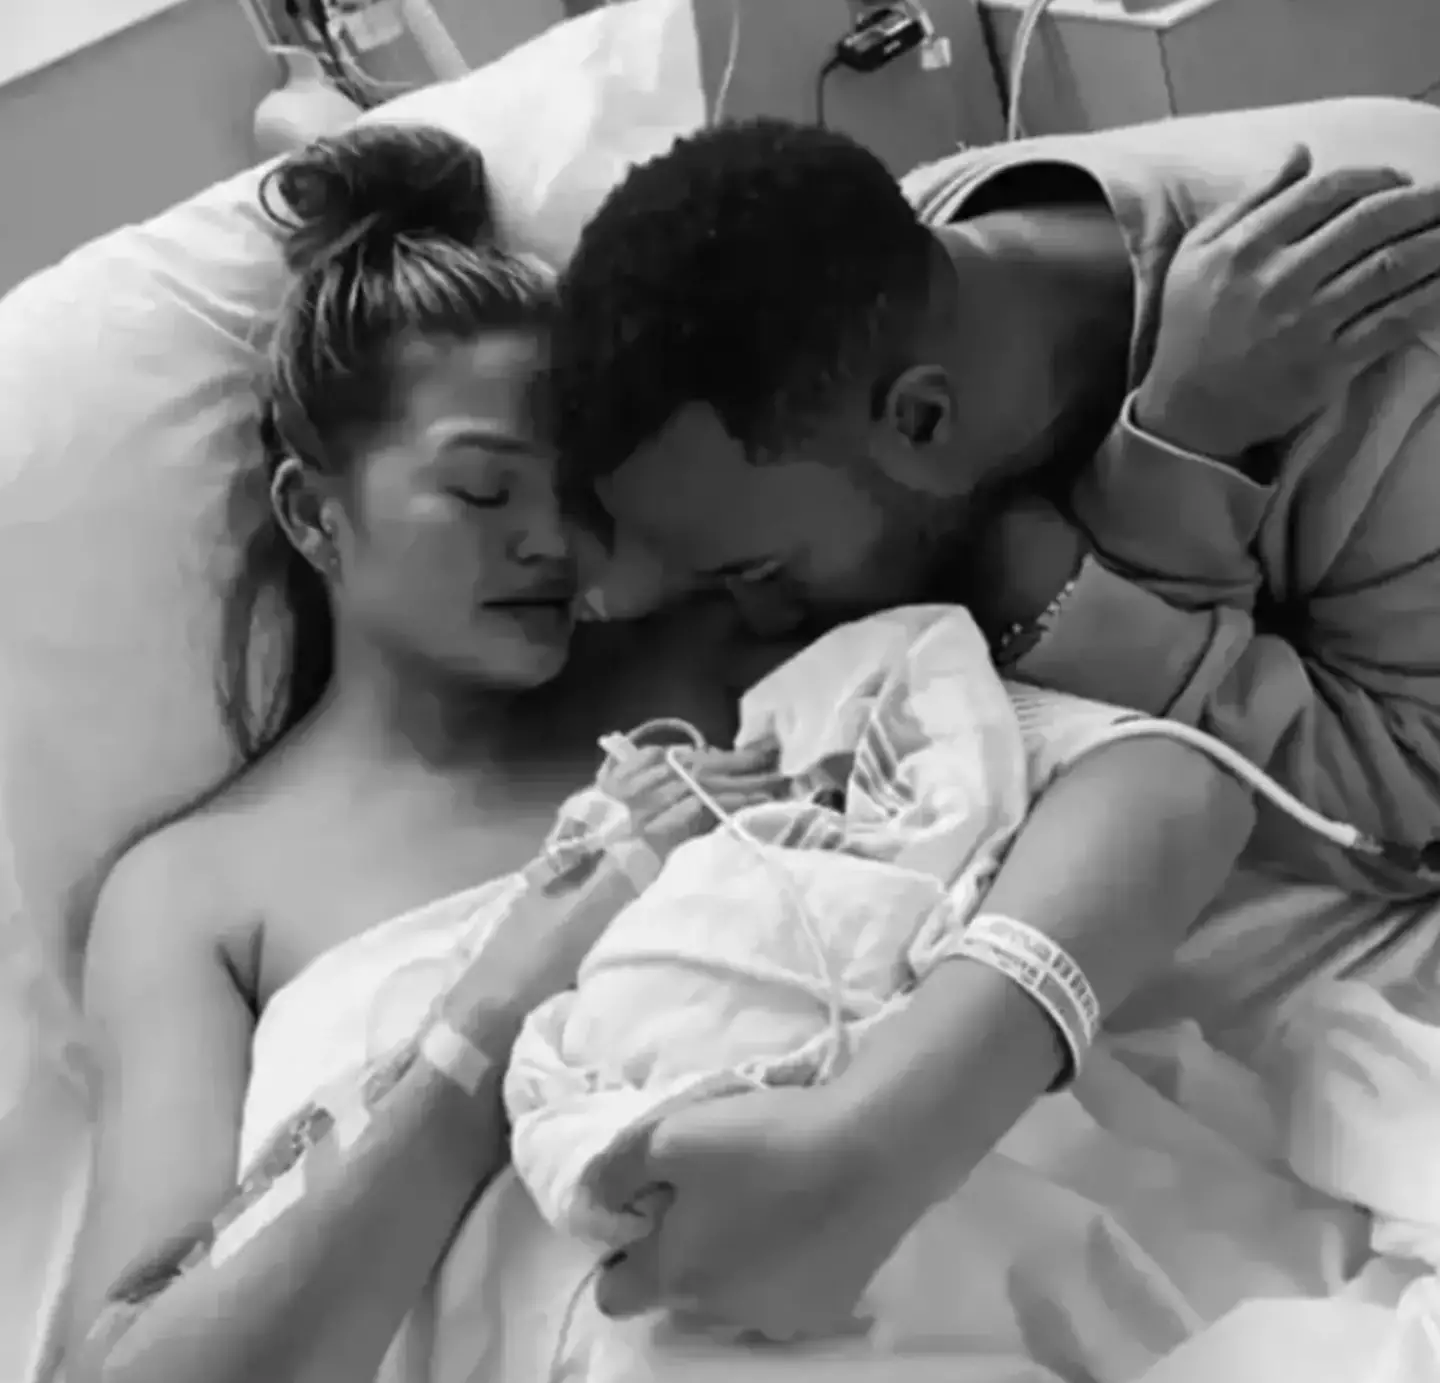 Chrissy and husband John Legend lost their son Jack halfway through her pregnancy.